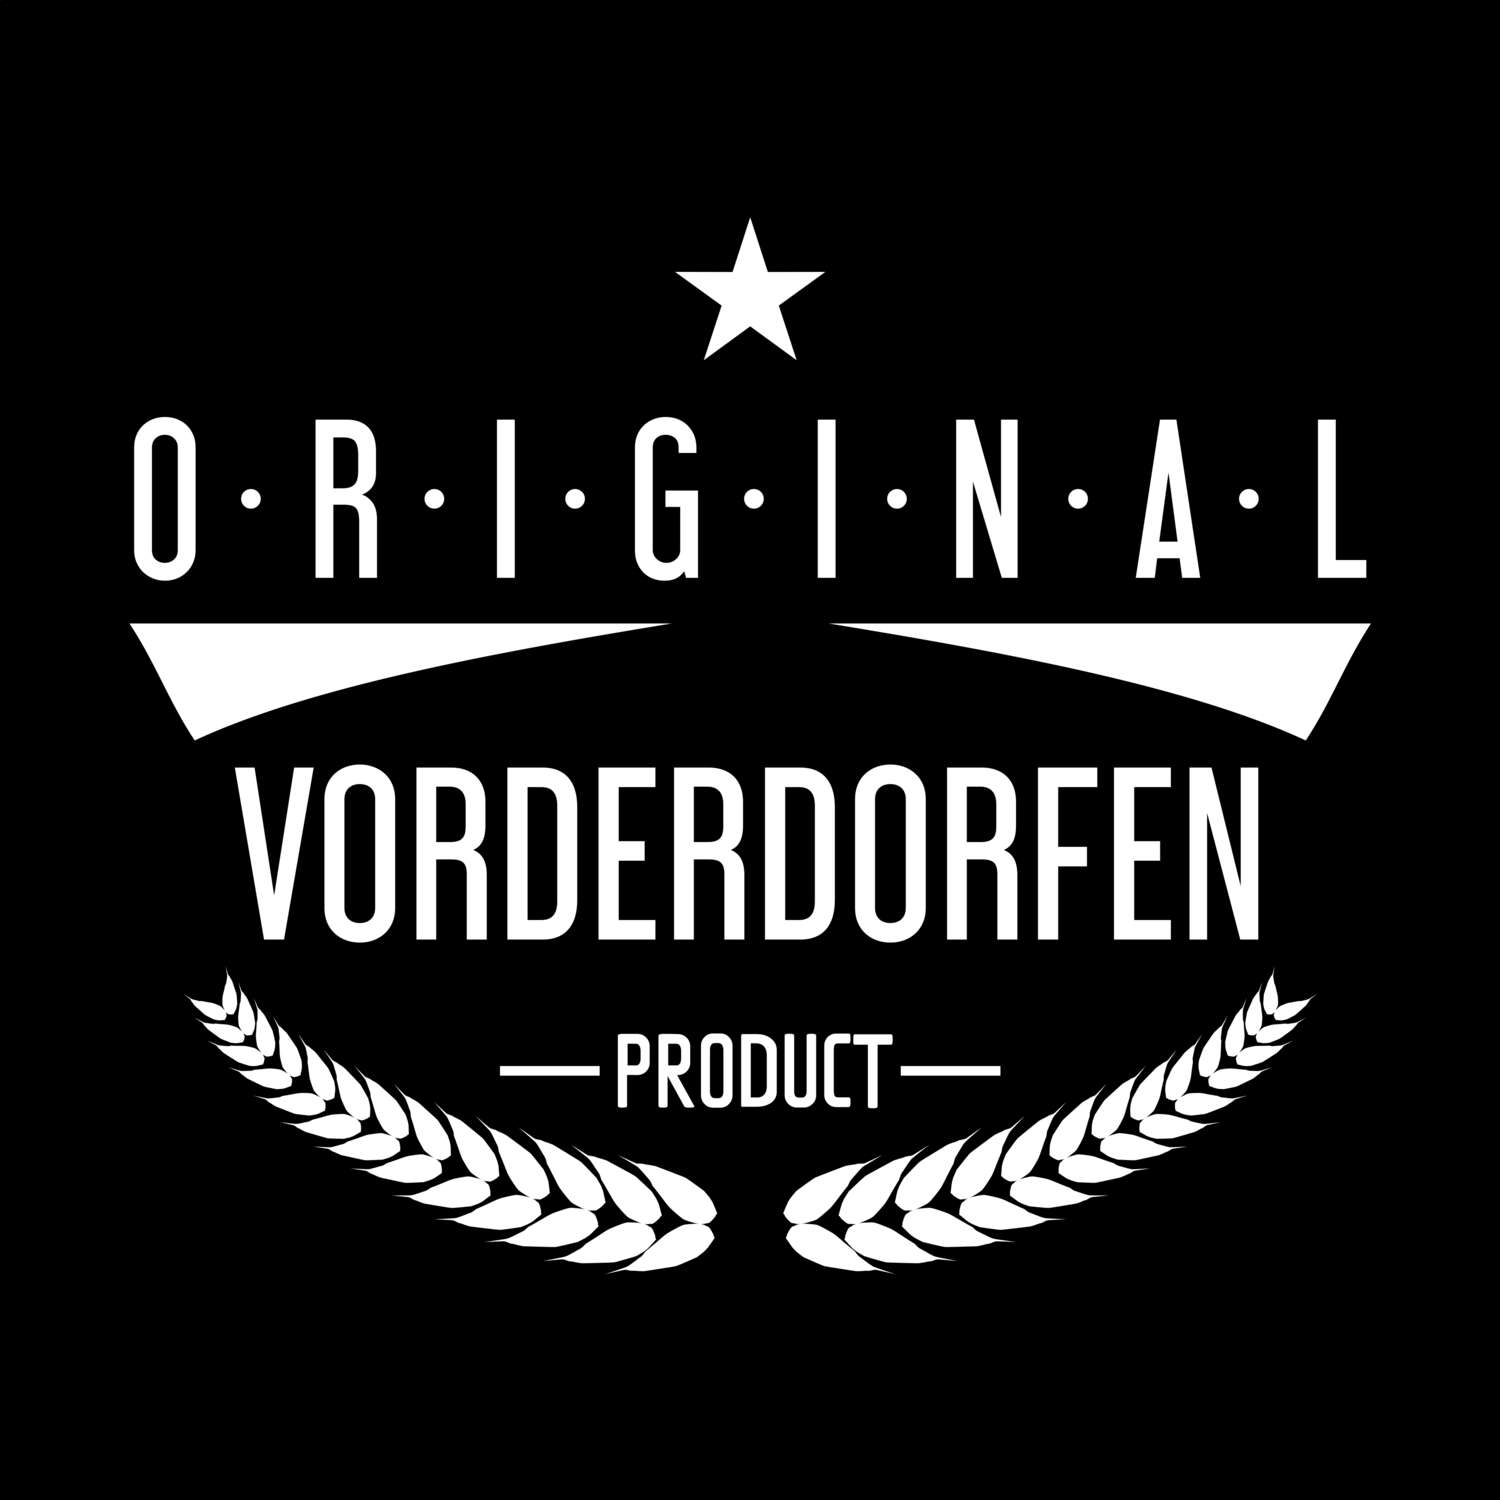 Vorderdorfen T-Shirt »Original Product«